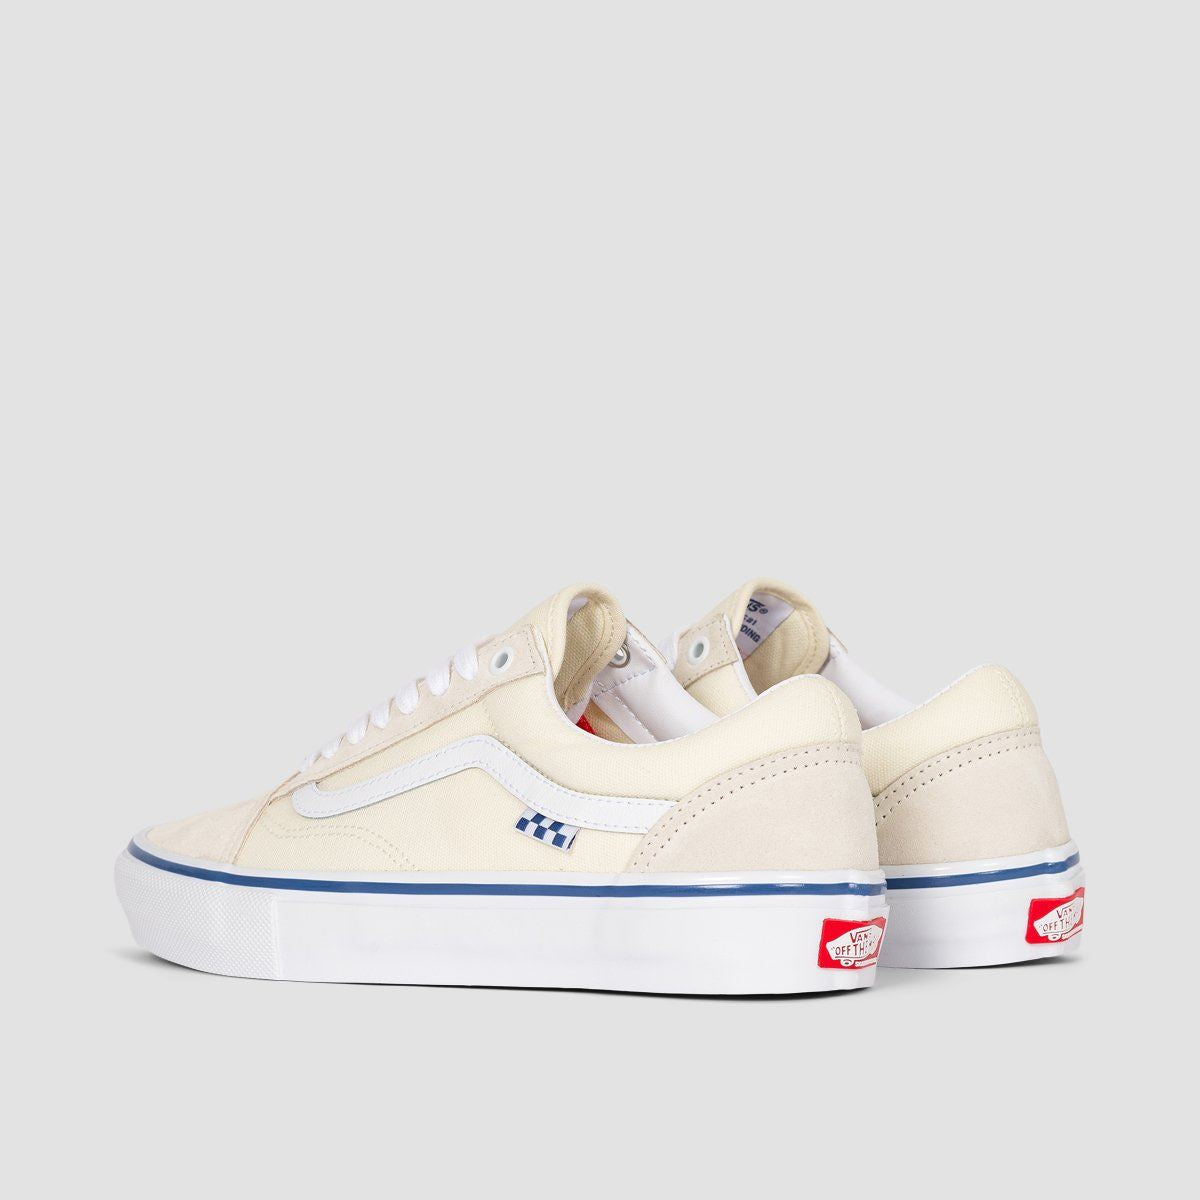 Vans Skate Old Skool Shoes - Off White